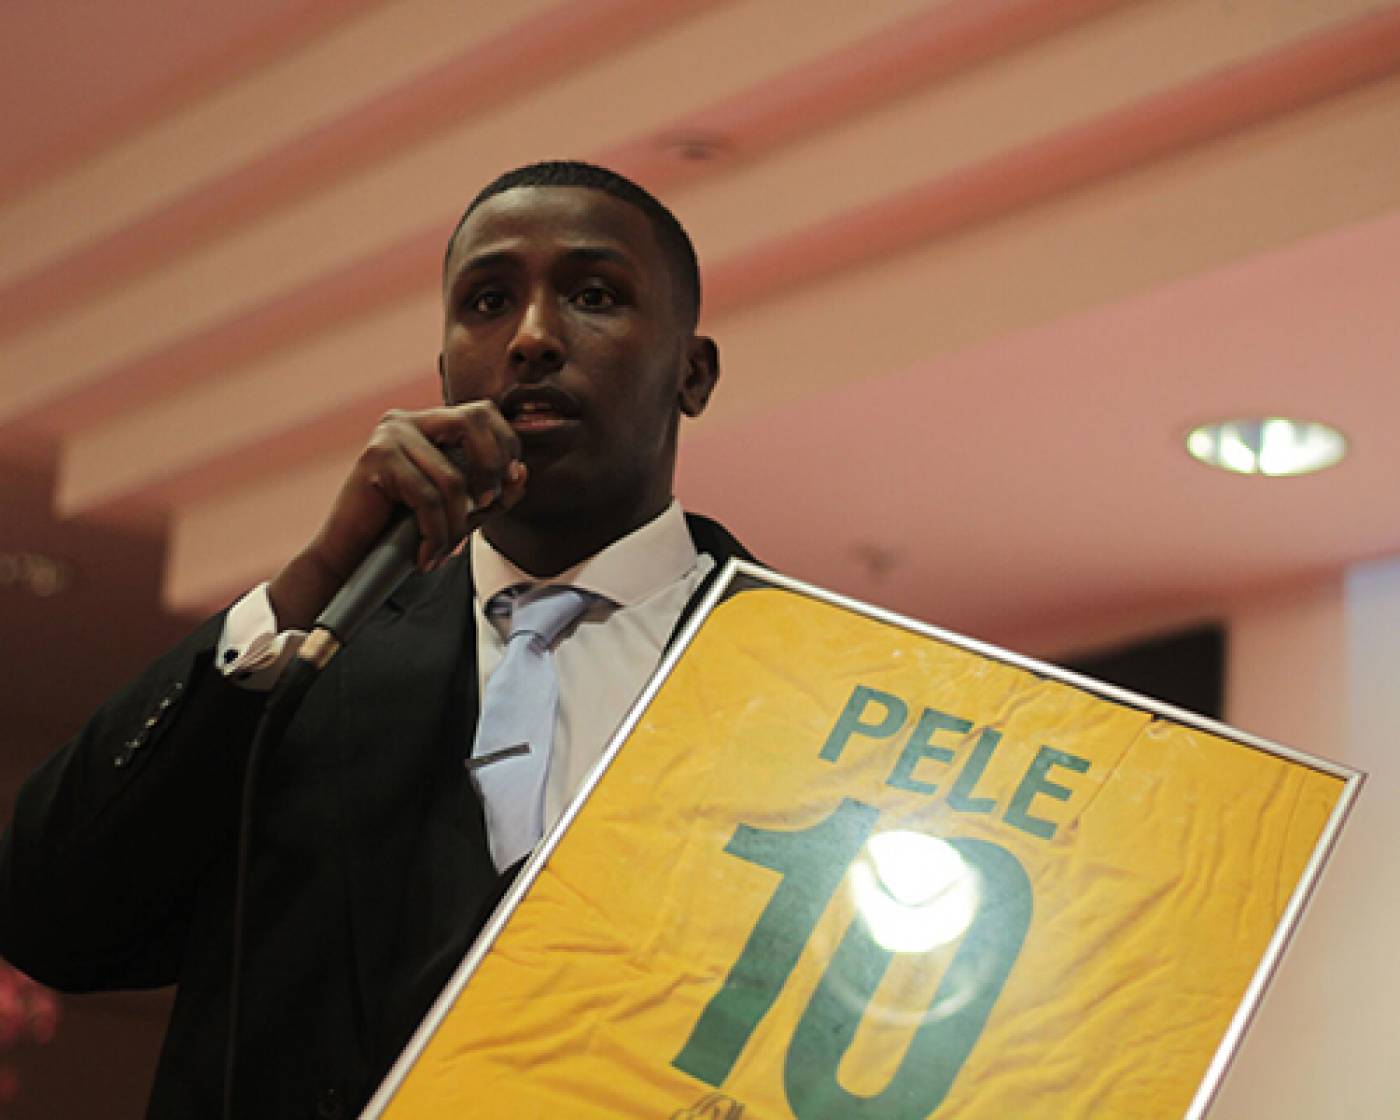 Abdul auctions a signed Pele shirt